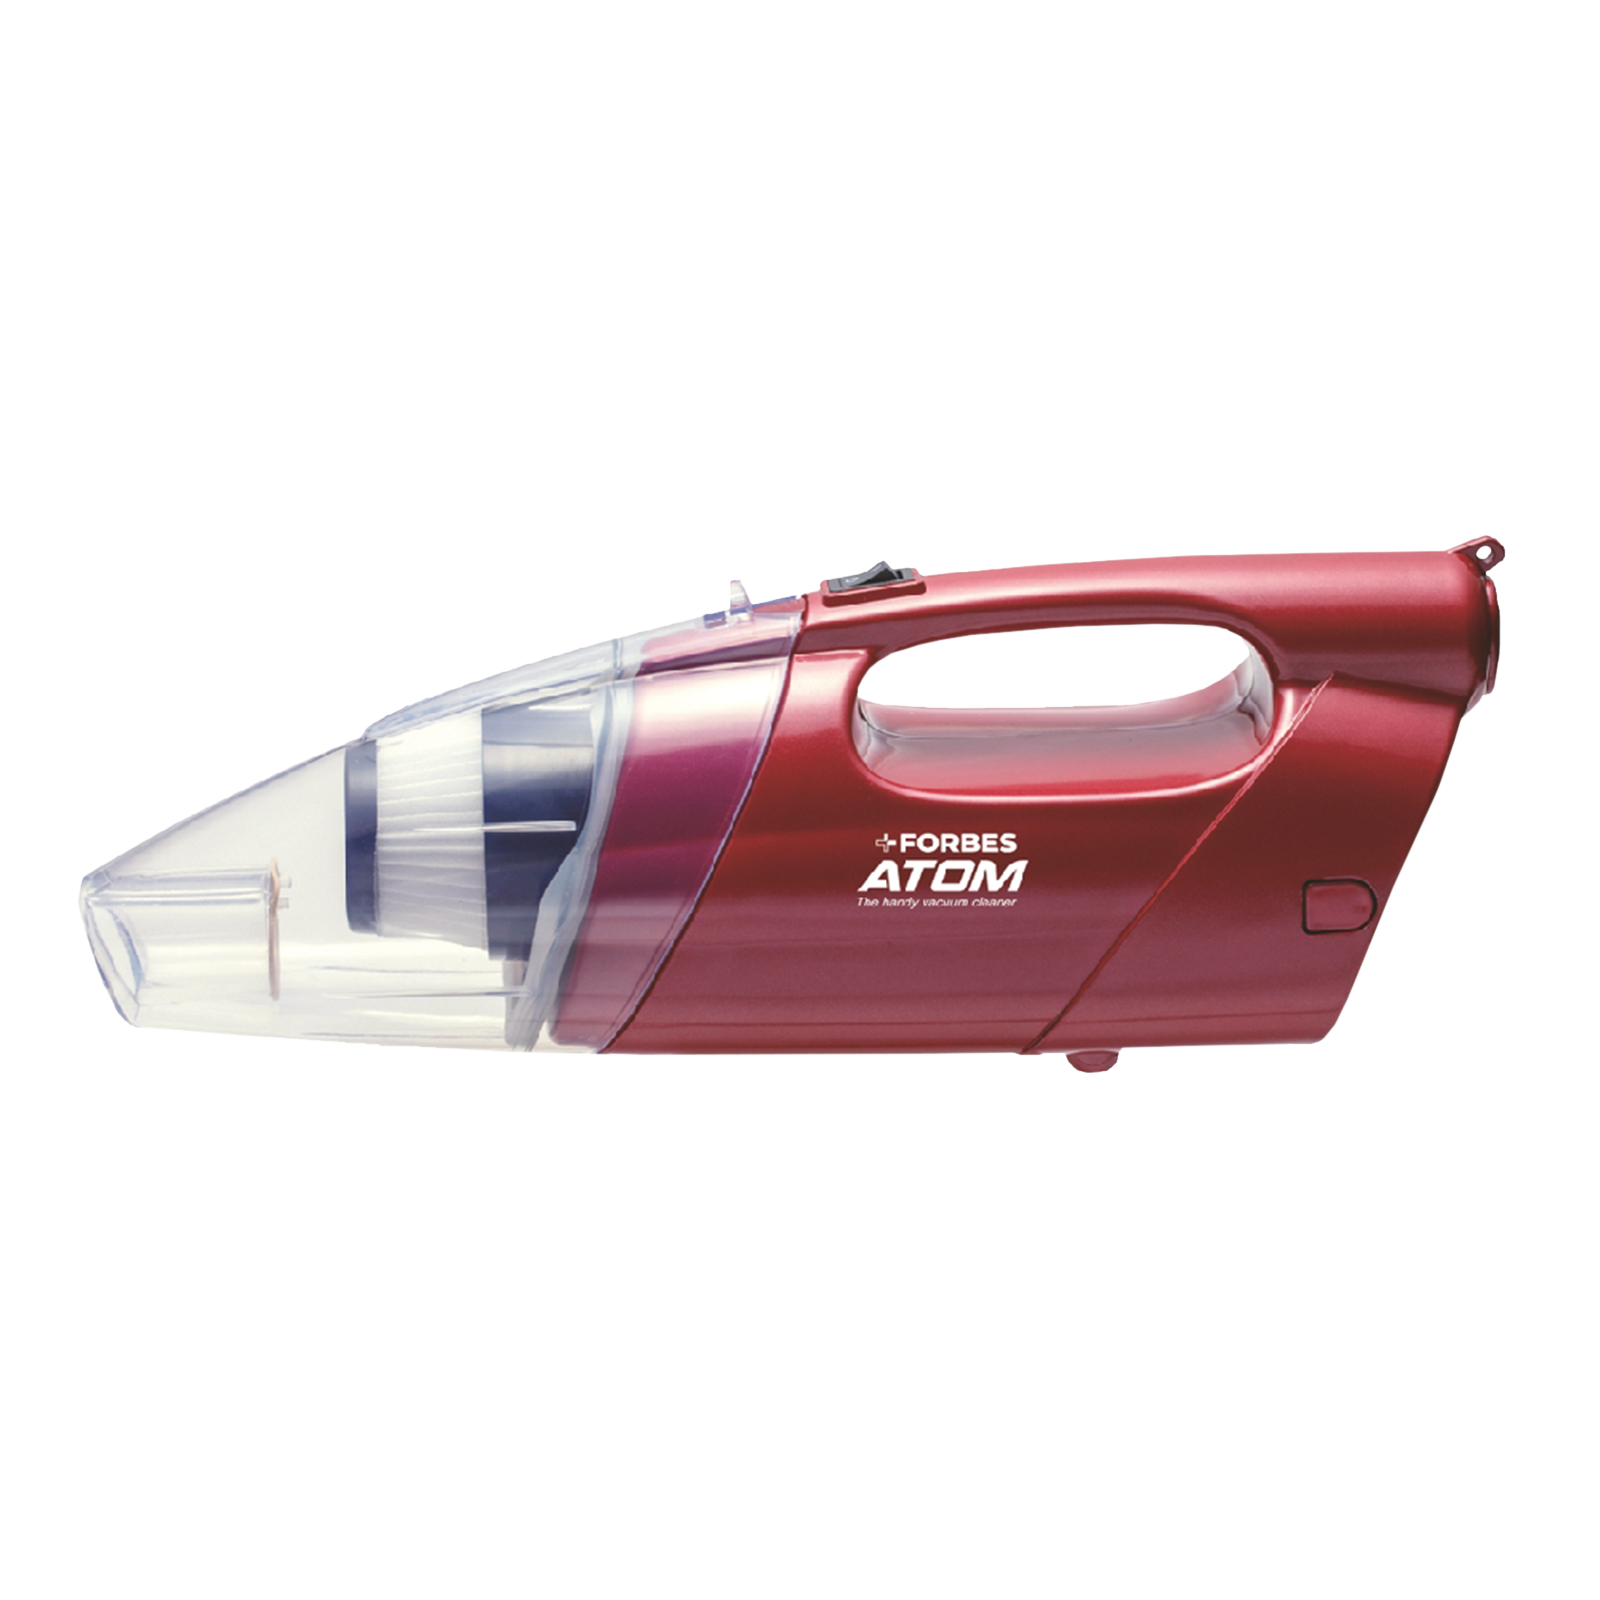 Eureka Forbes Atom Vacuum Cleaner (0.5 Litres Tank, Red)